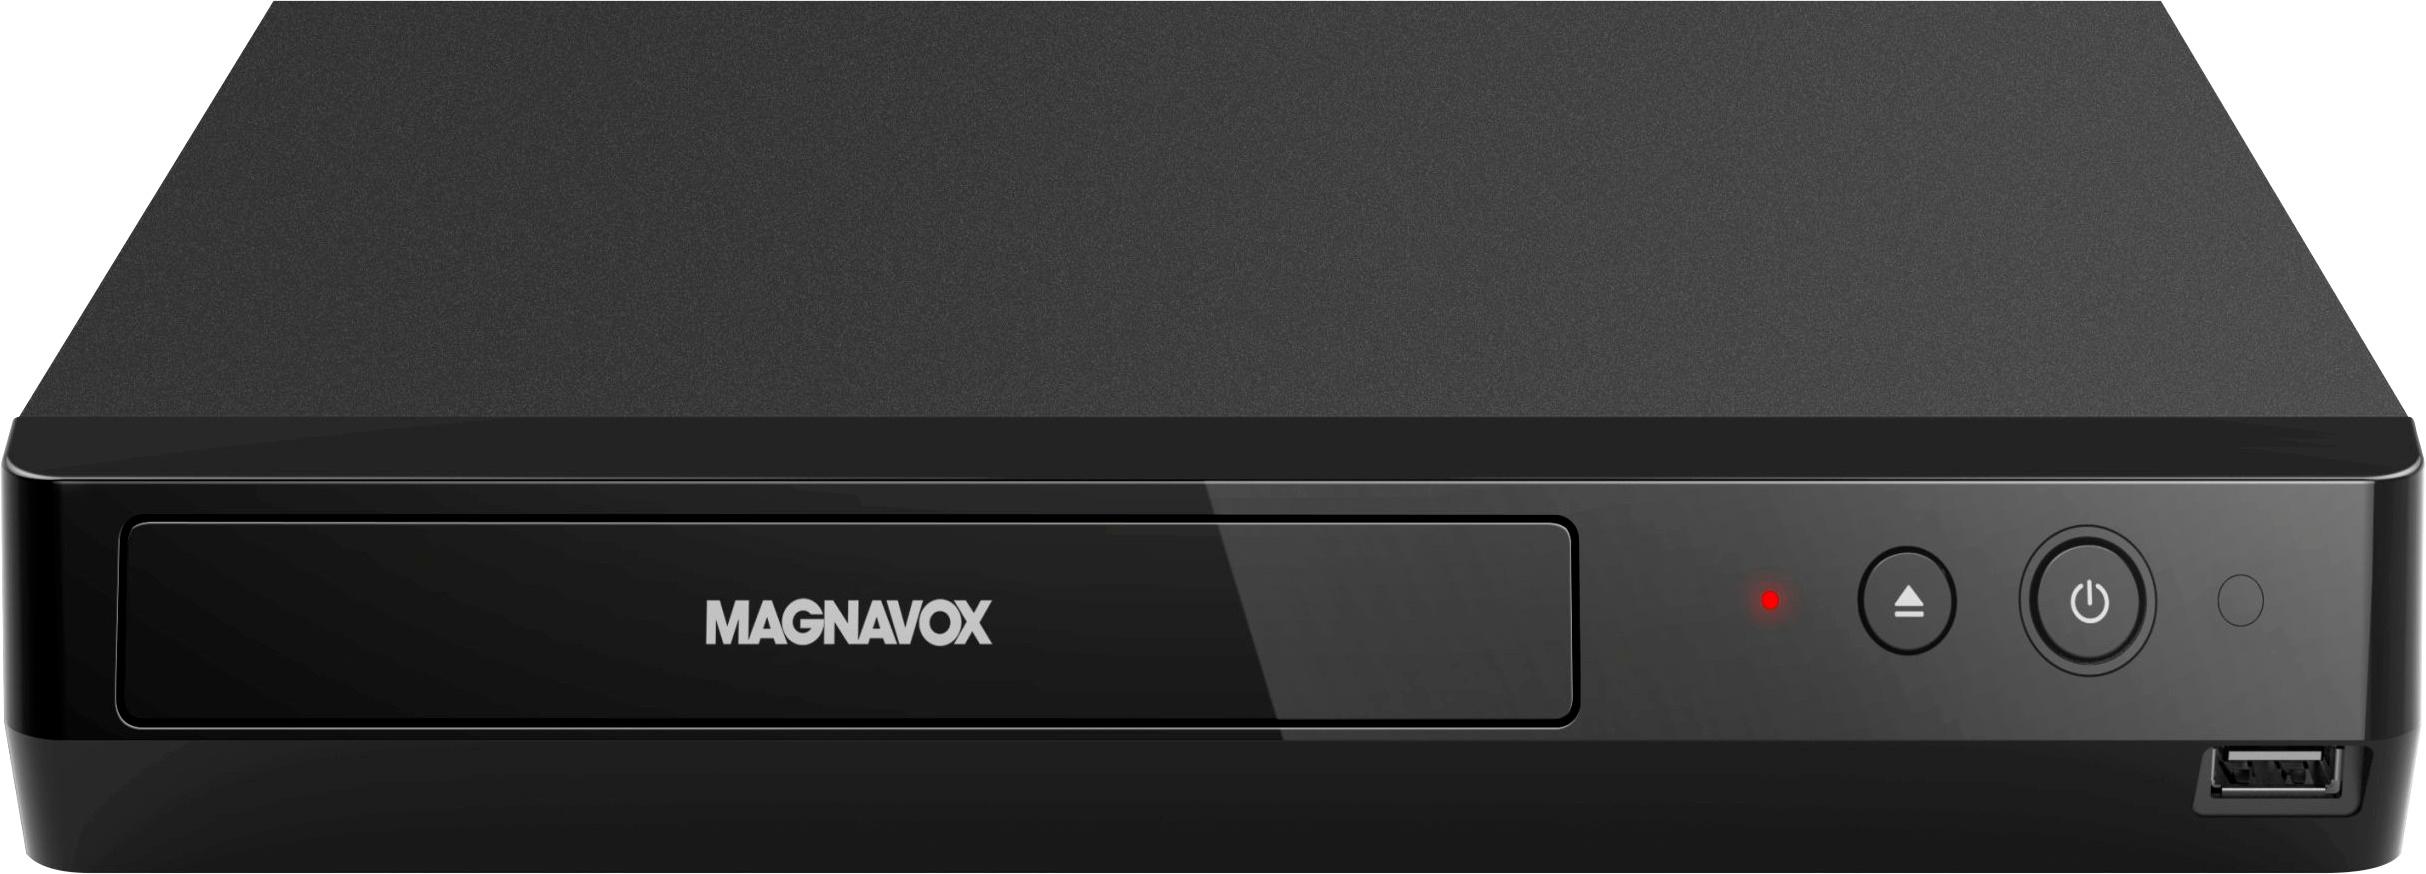 Magnavox Mbp6700p 4k Ultra Hd Blu Ray Player Black Mbp6700 F7 Best Buy